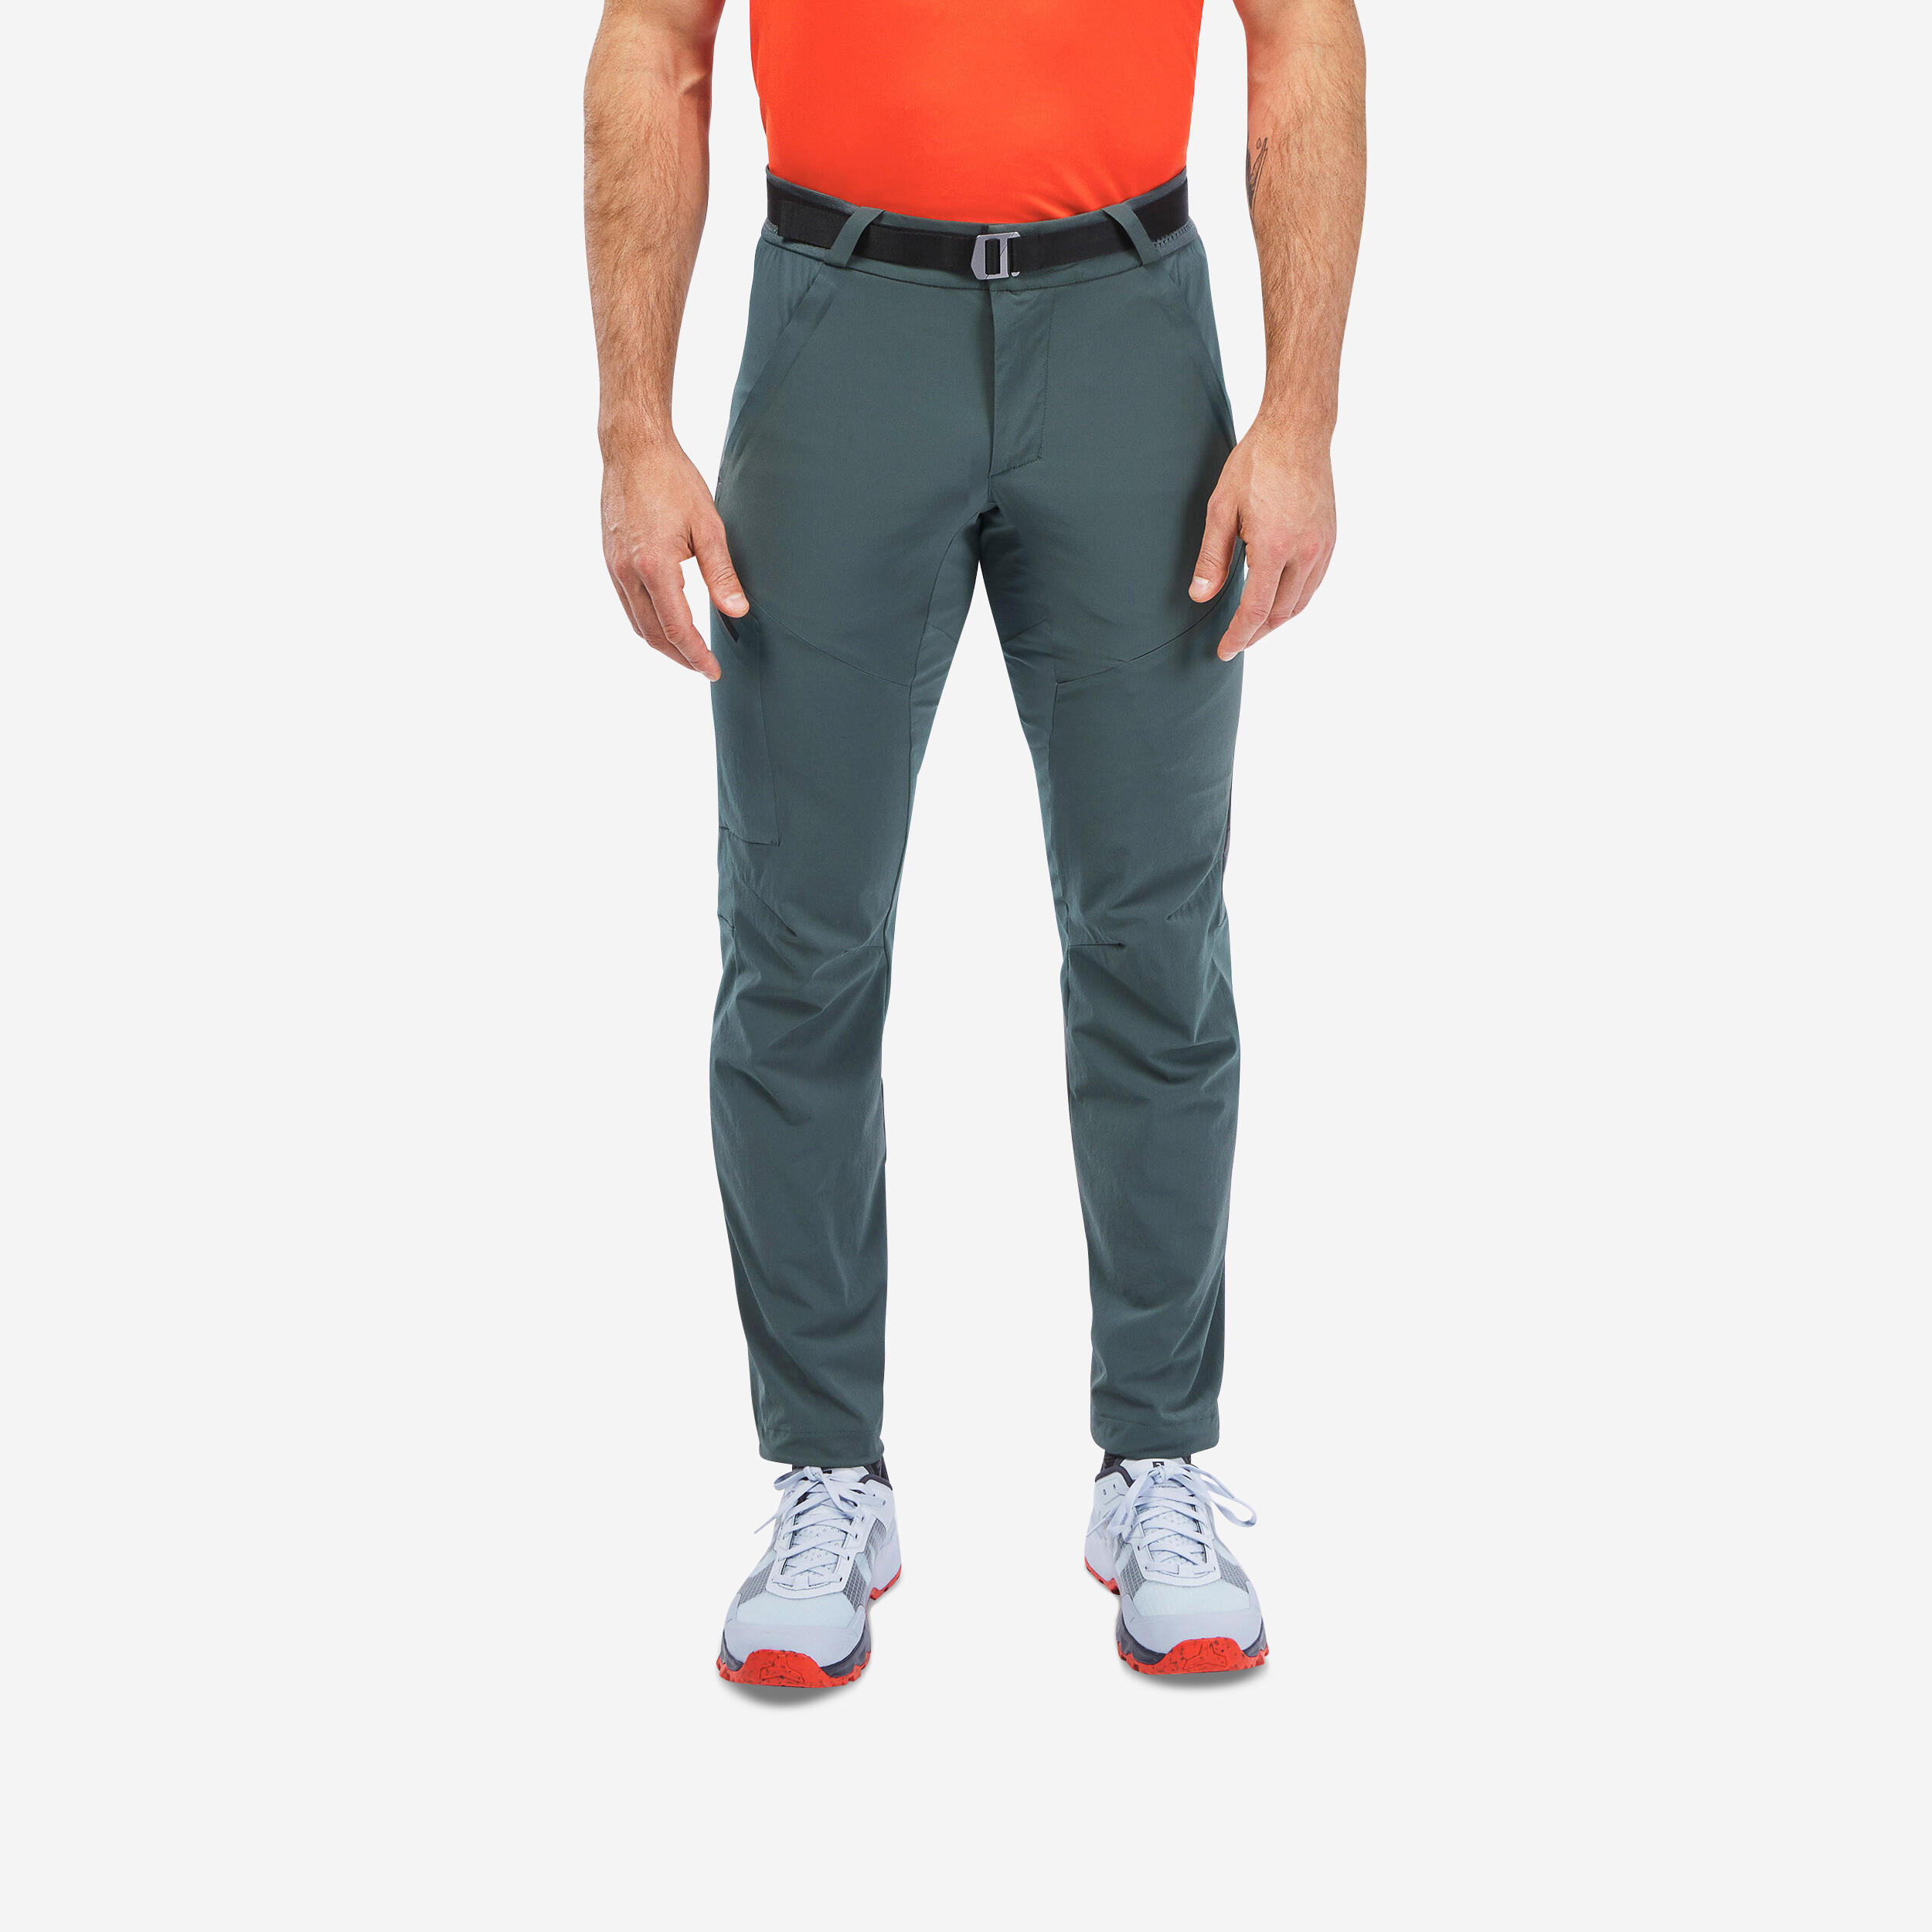 Men's Waterproof over trousers - 20,000 mm - Taped seams - MT500 FORCLAZ |  Decathlon